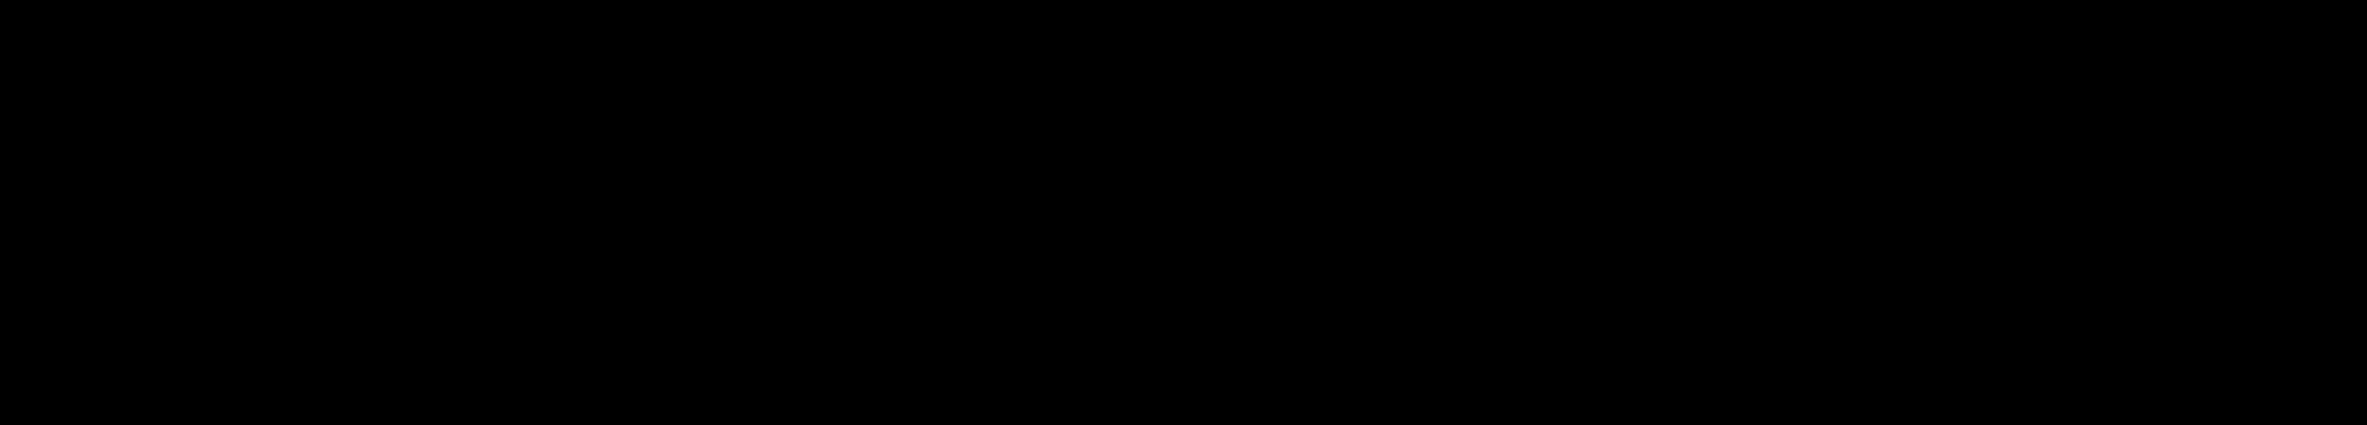 Univision Network Logo Black Background PNG image